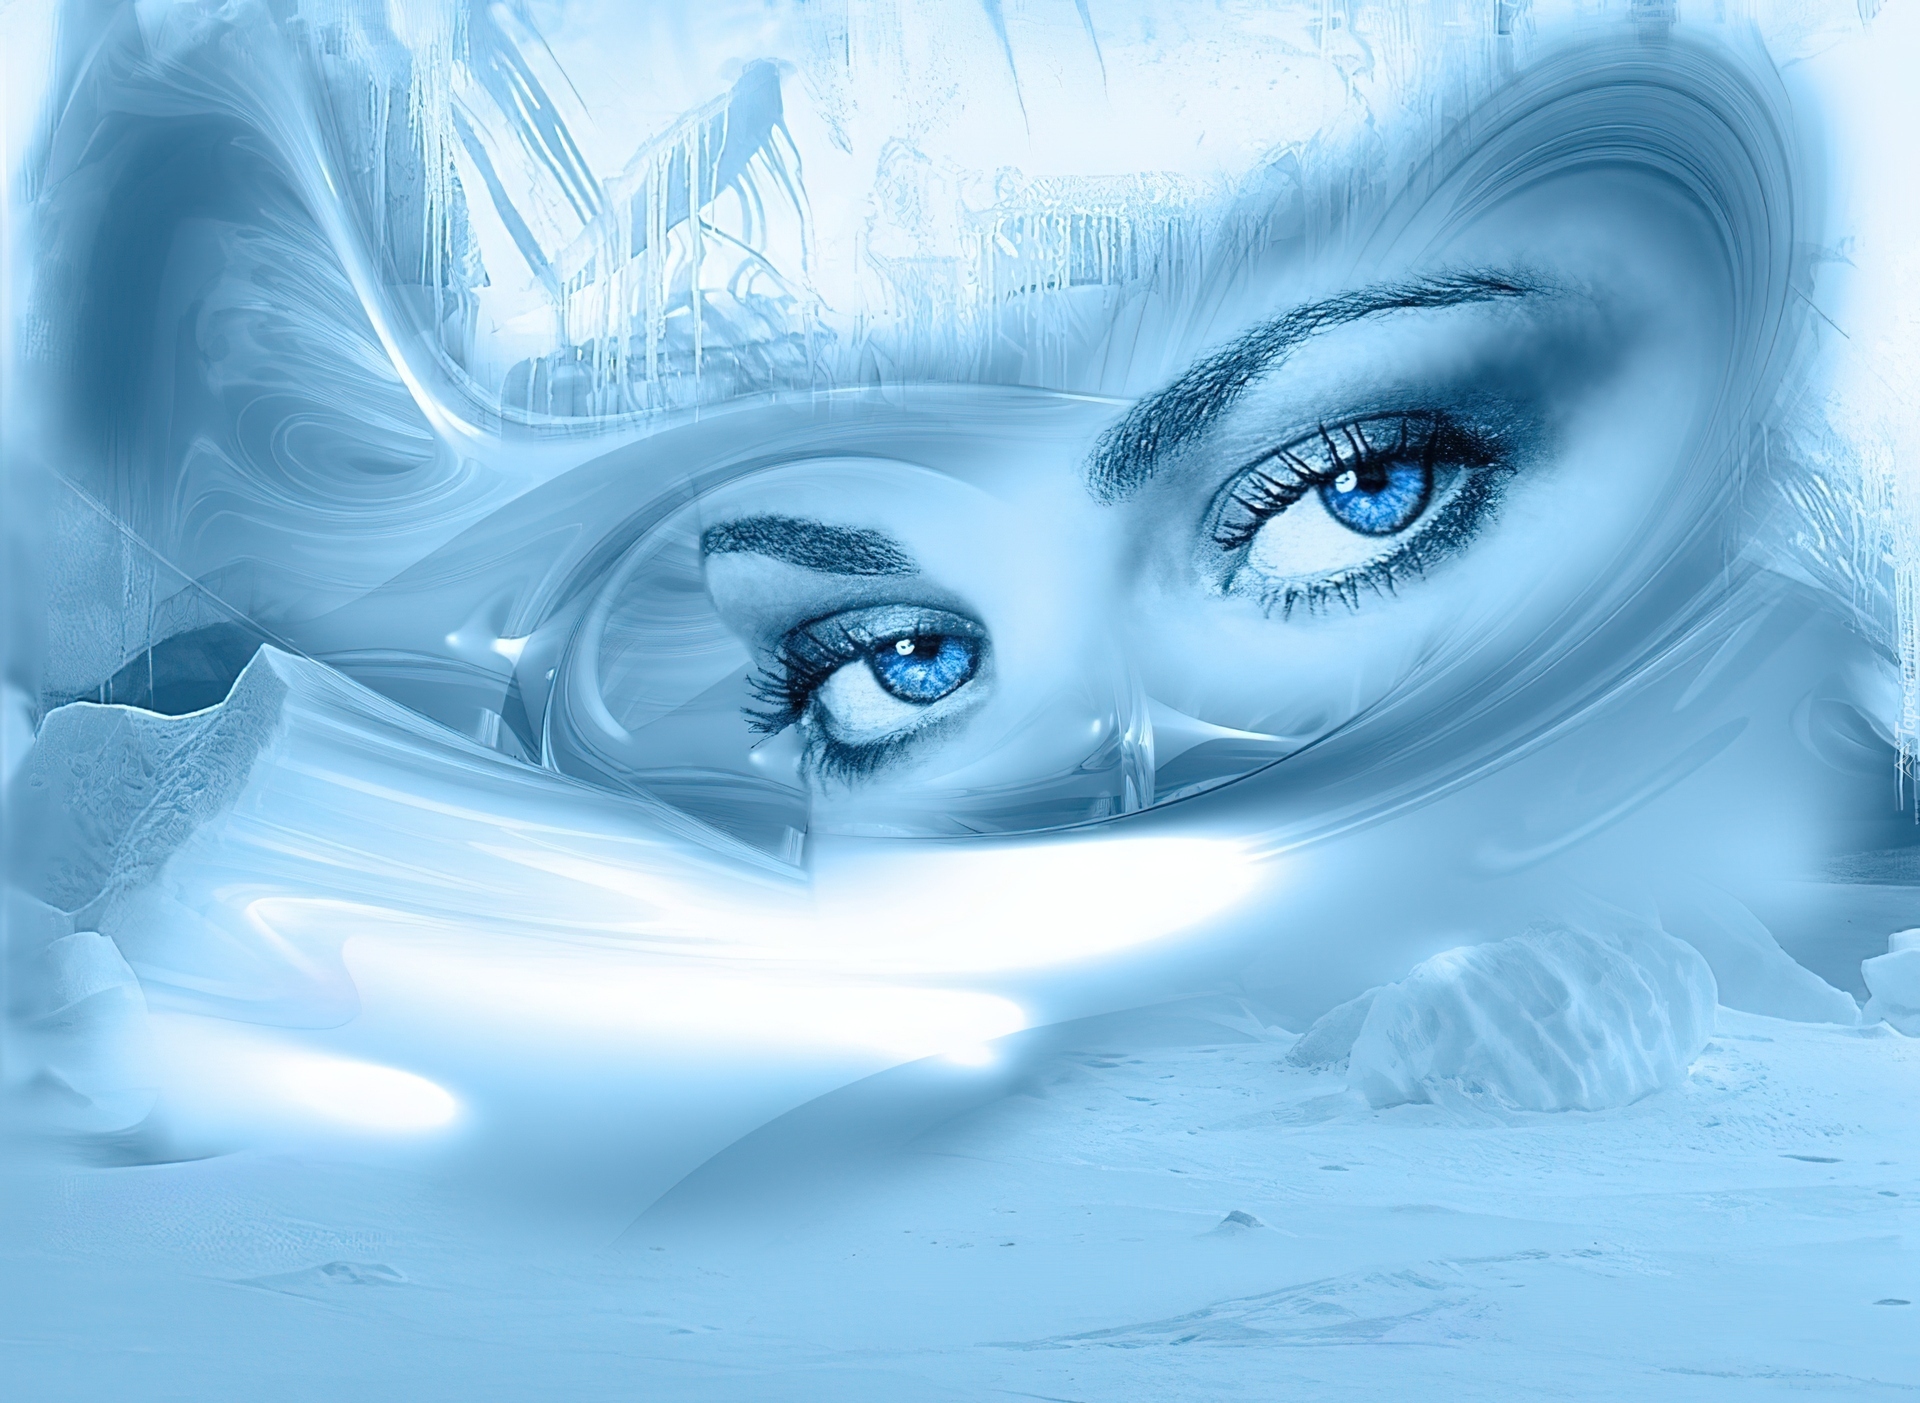 Лед глазки. Матушка зима. Глаза снежной королевы. Ледяной взгляд. Взгляд снежной королевы.